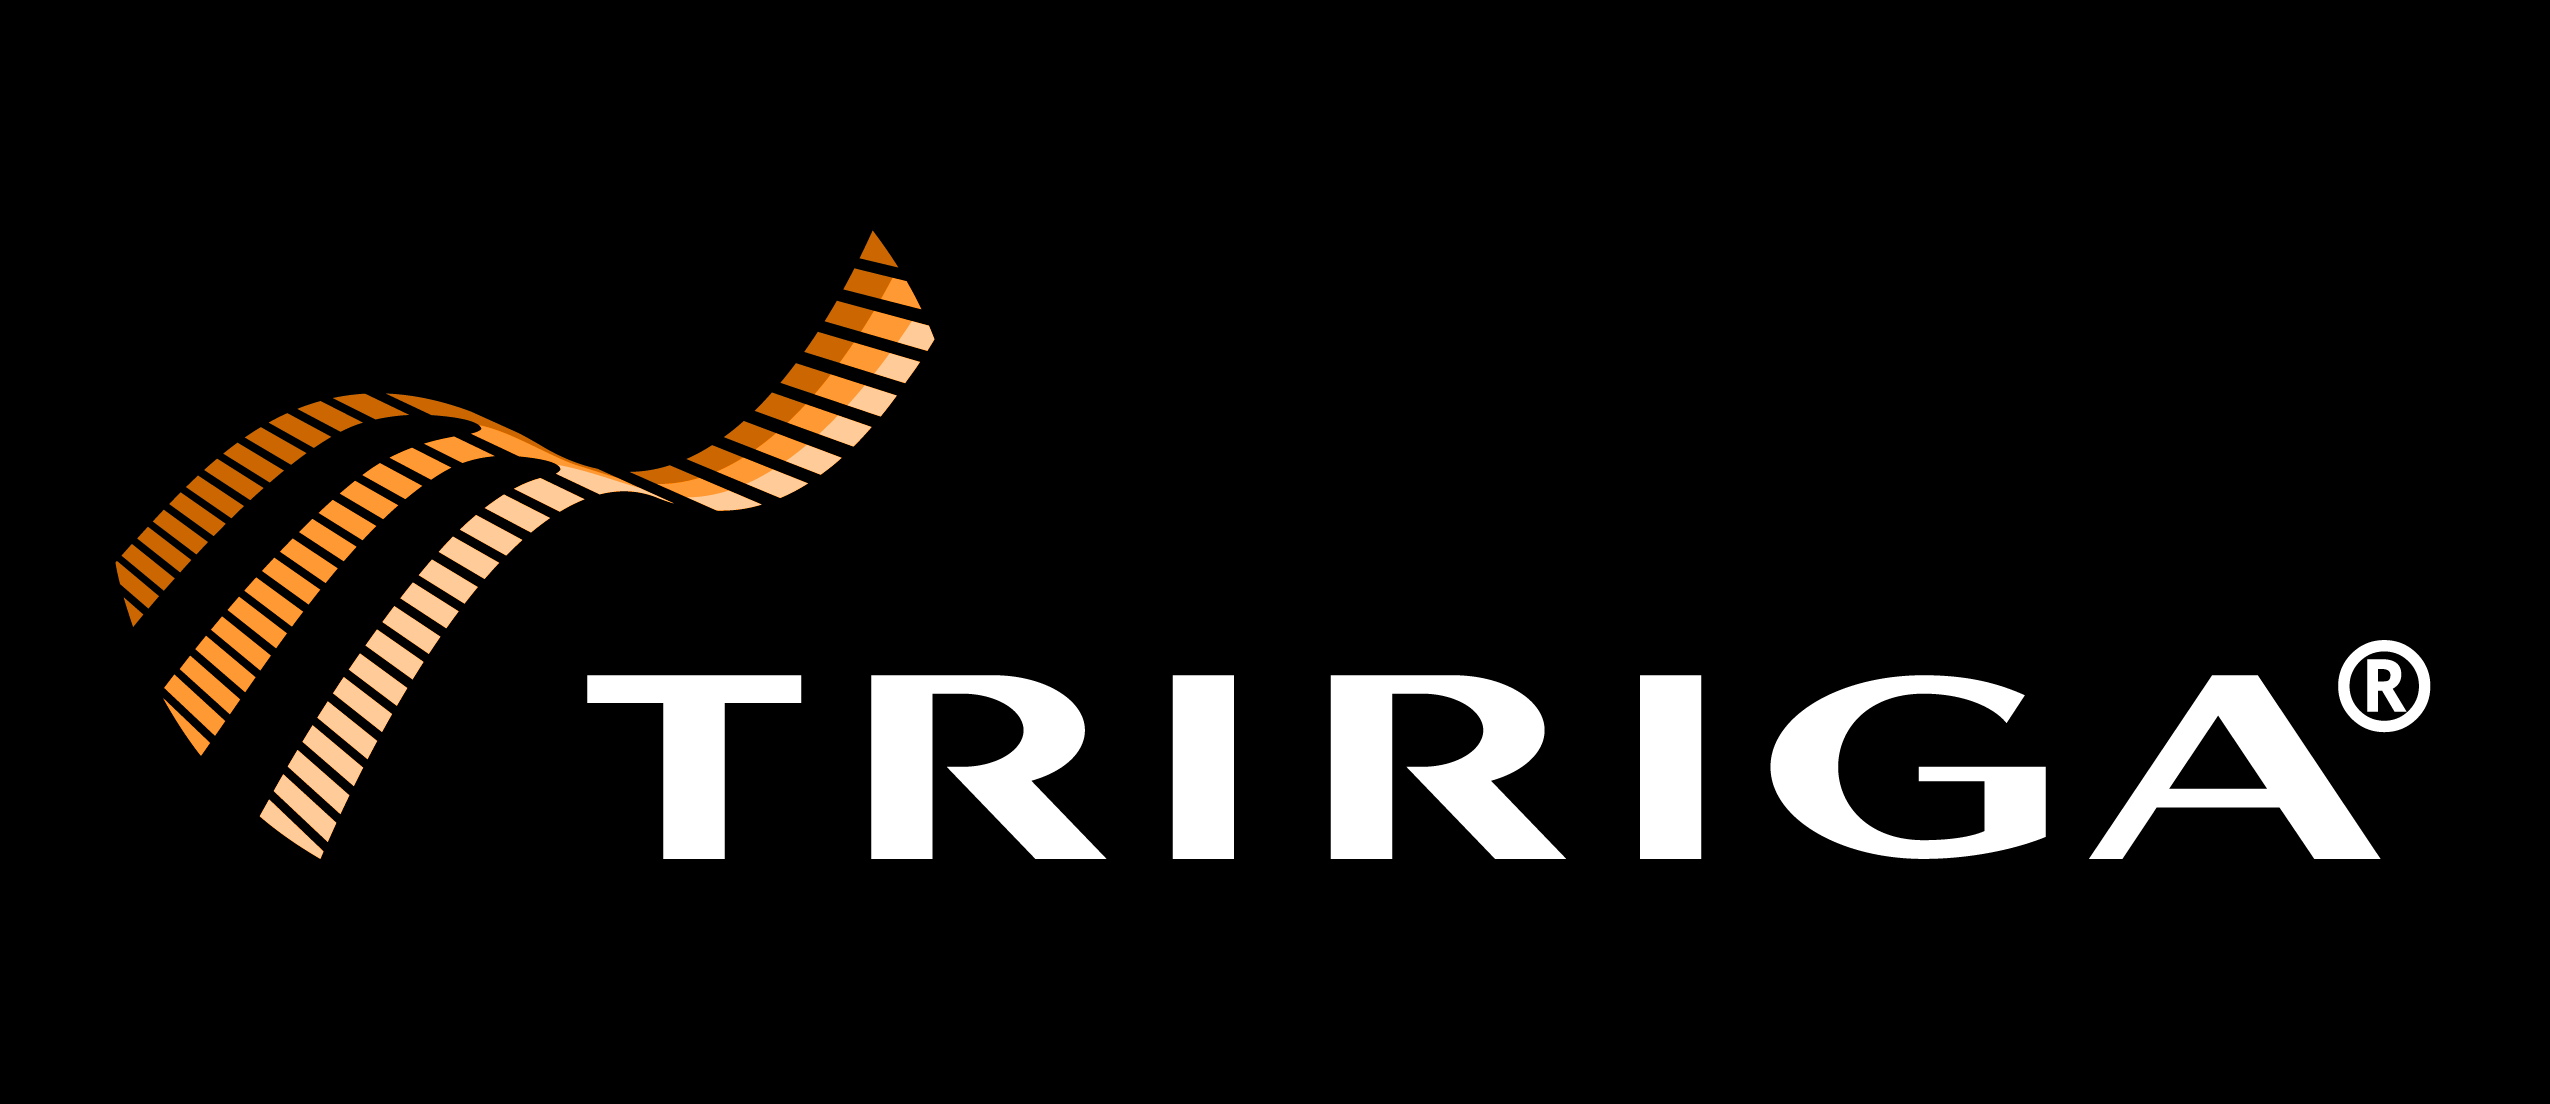 TRIRIGA Logo - Image - Tririga-logo-inverted.png | TRIRIGAPEDIA Wiki | FANDOM ...